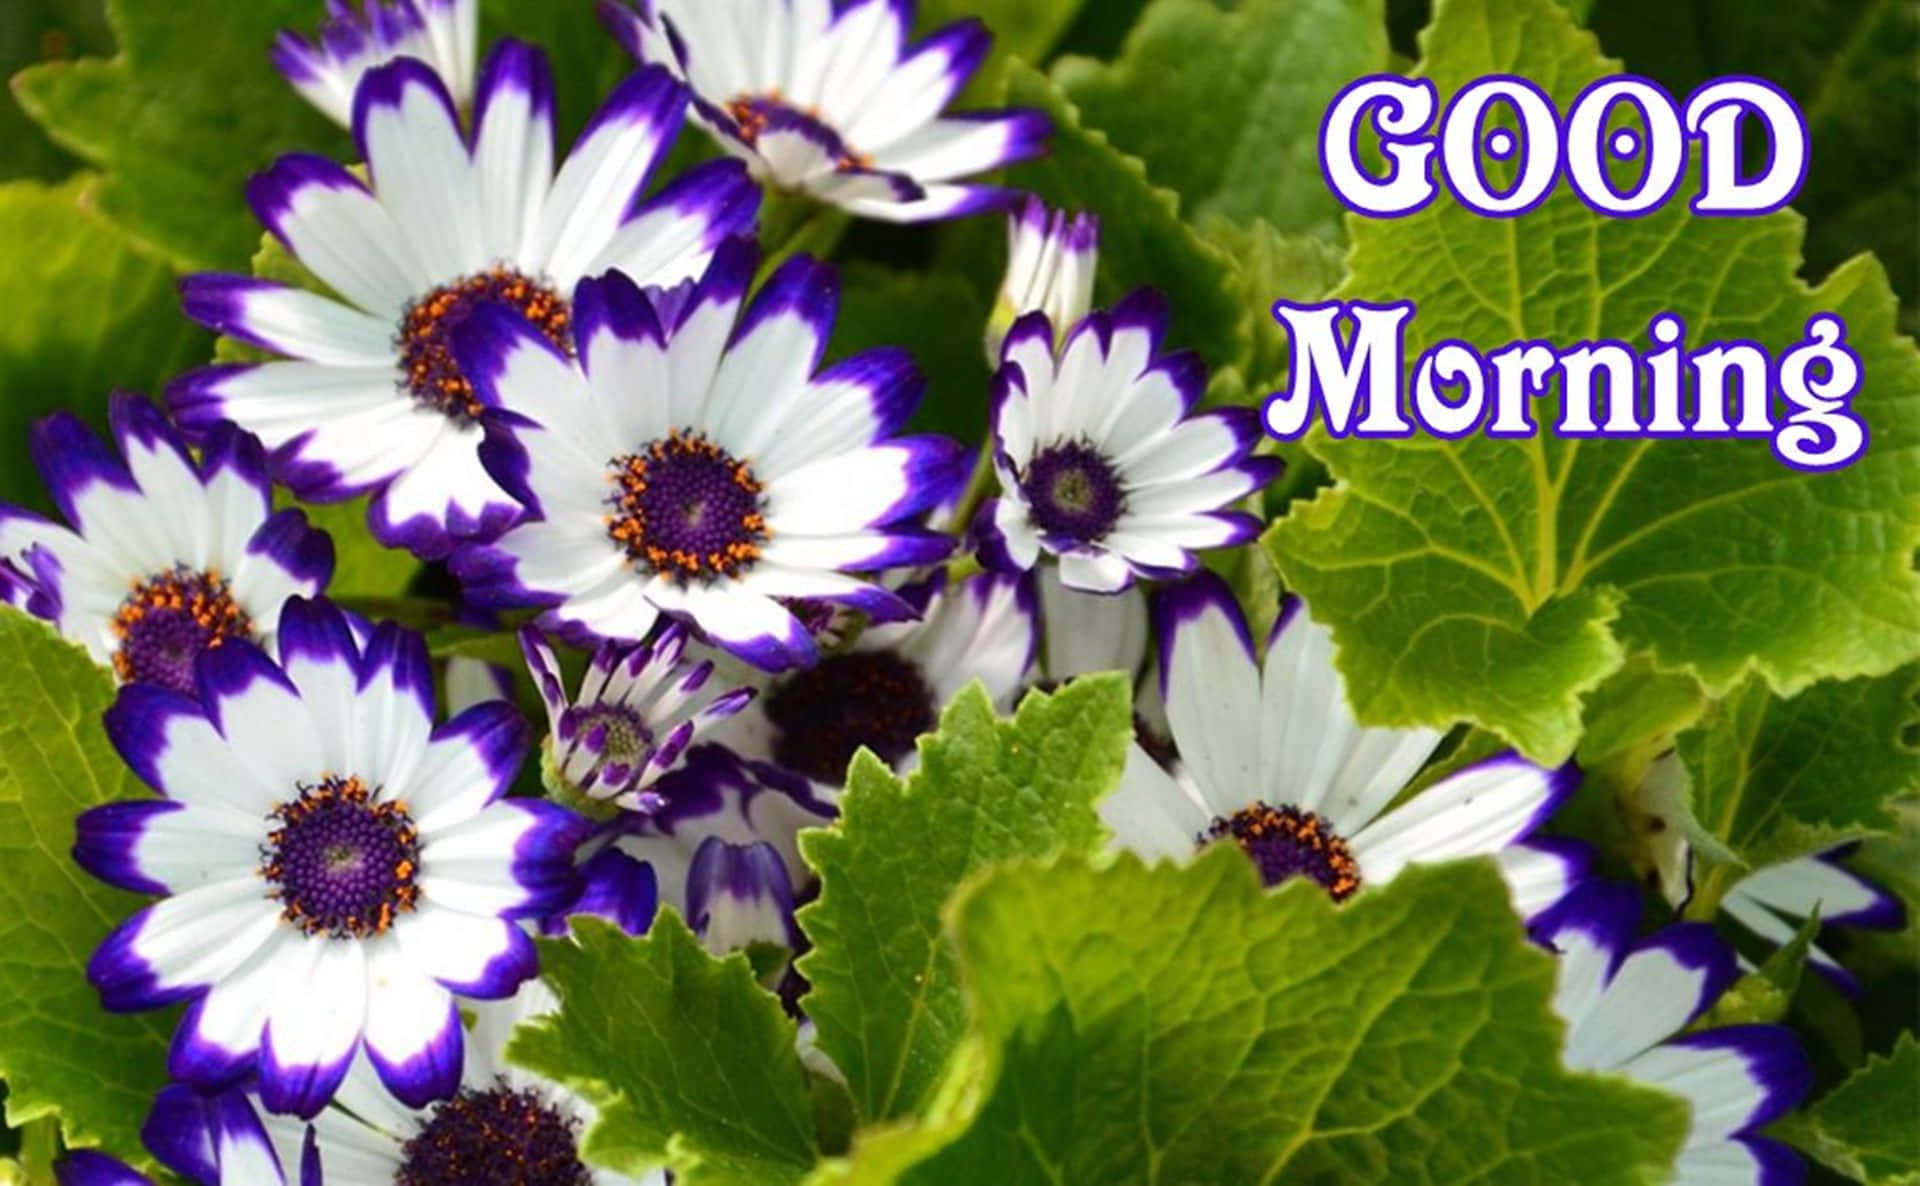 Good Morning White Violet Flower Picture